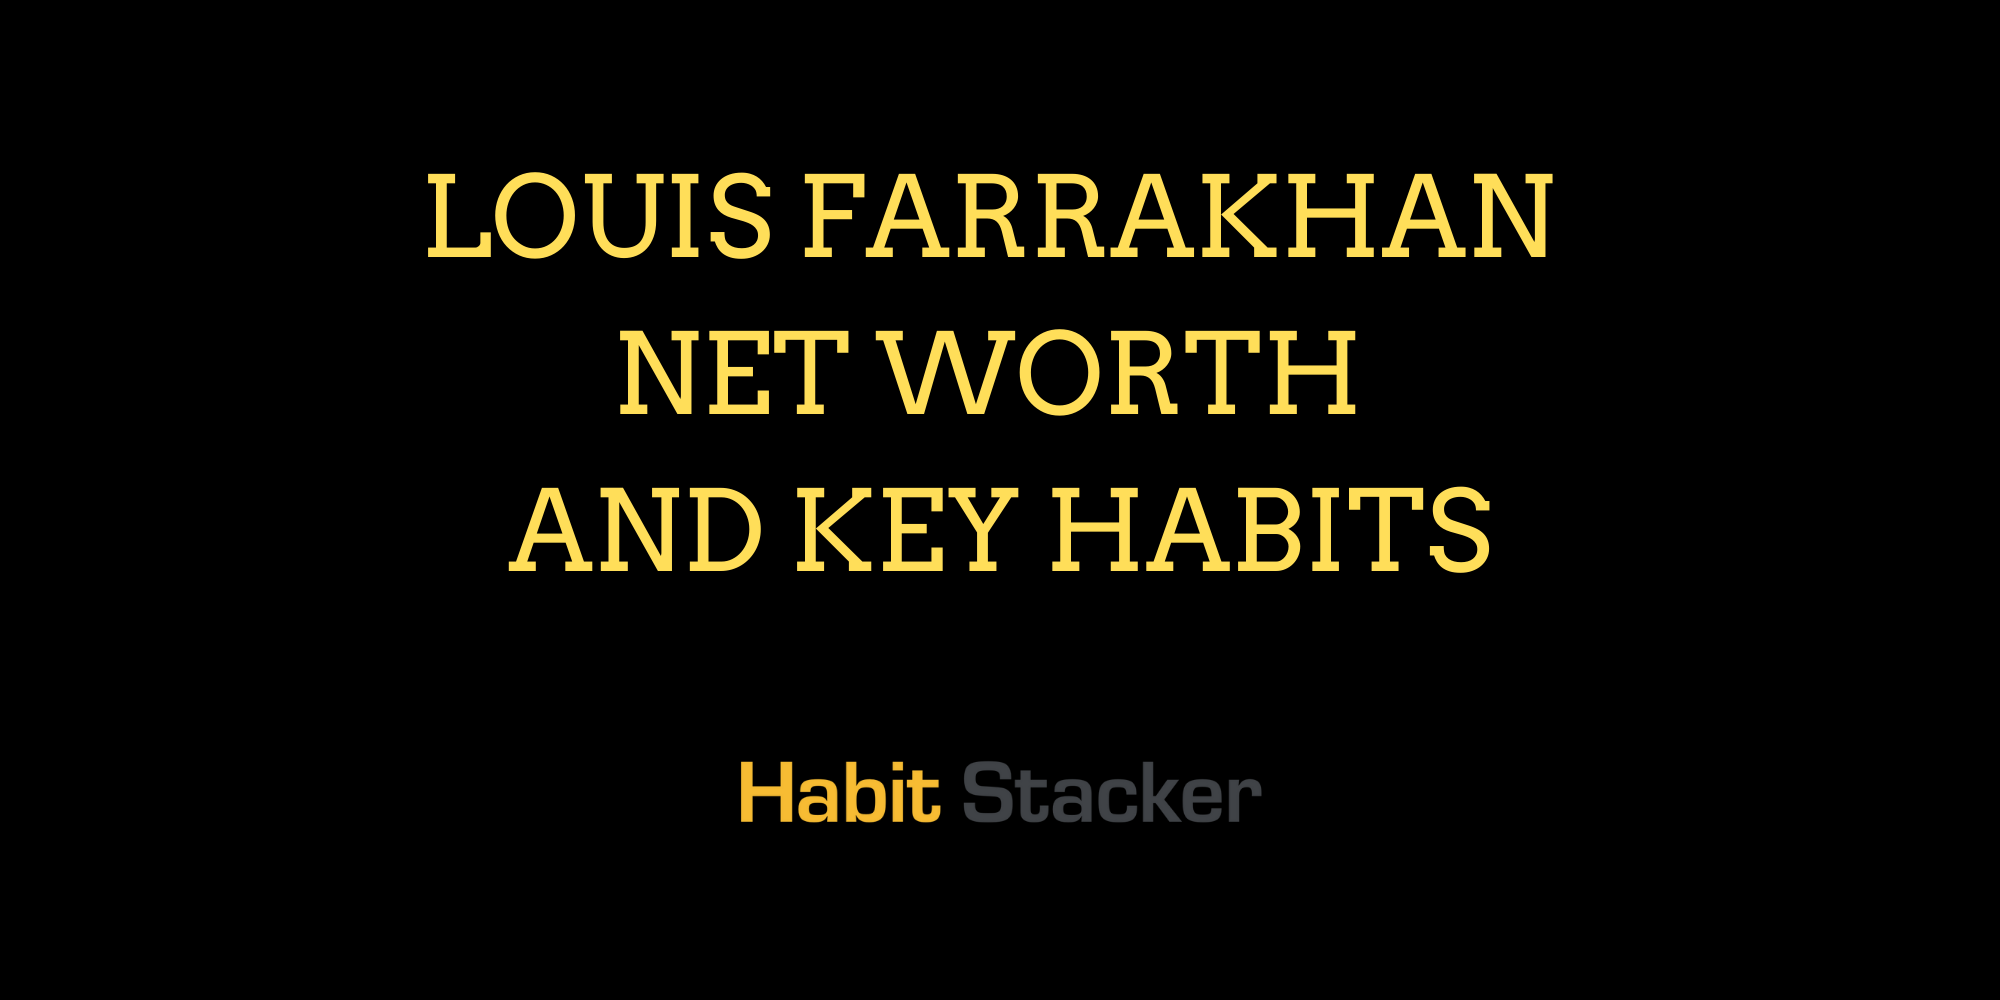 Louis Farrakhan Net Worth and Key Habits